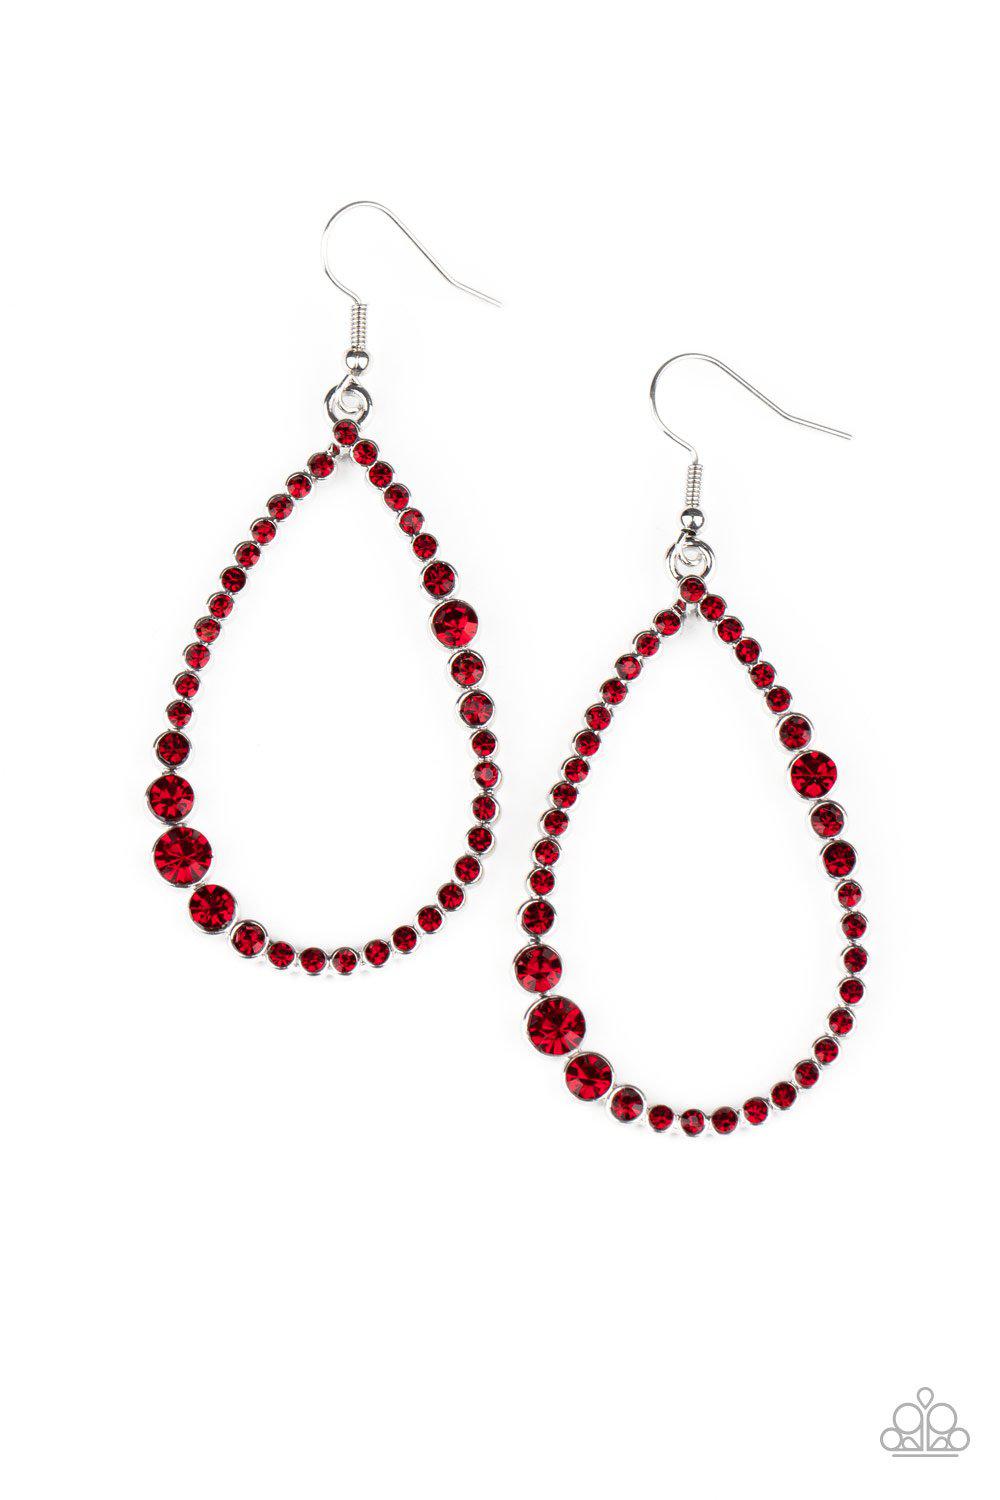 Diva Dimension Red Rhinestone Teardrop Earrings - Paparazzi Accessories-CarasShop.com - $5 Jewelry by Cara Jewels